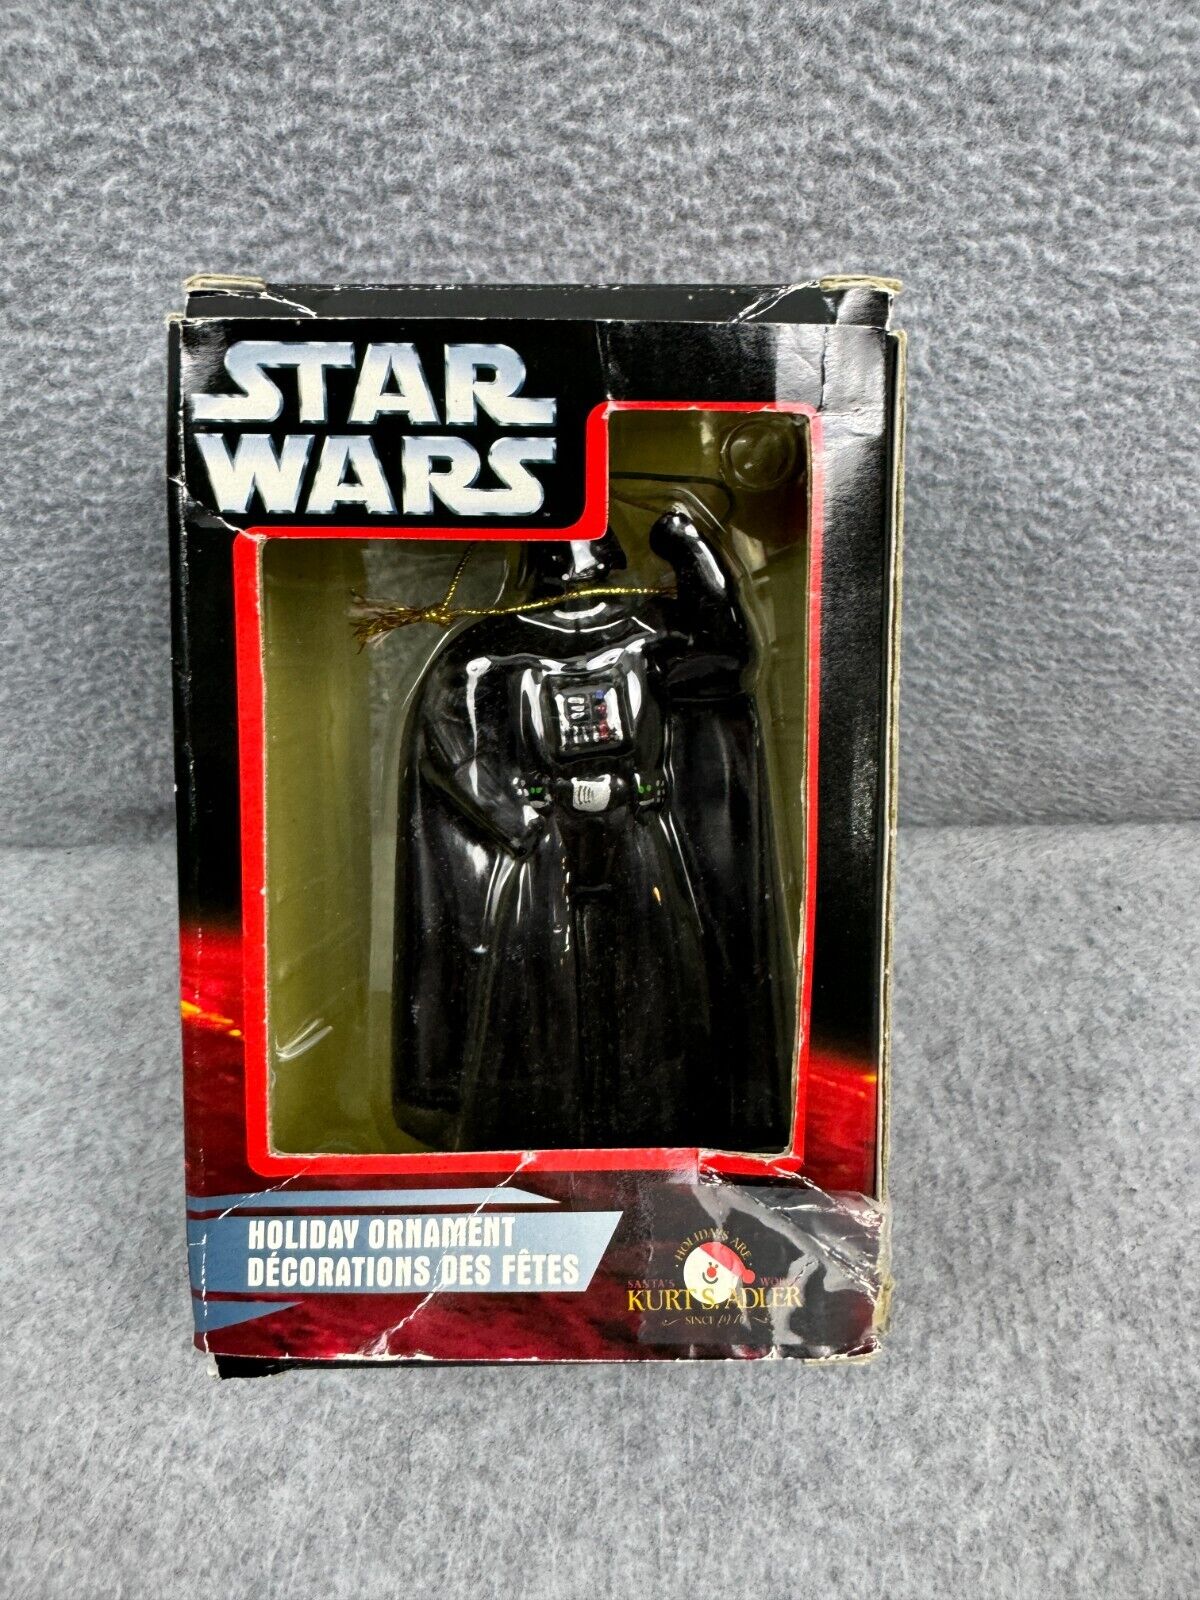 2005 Kurt S. Adler Star Wars Darth Vader Holiday Christmas Ornament New in Box